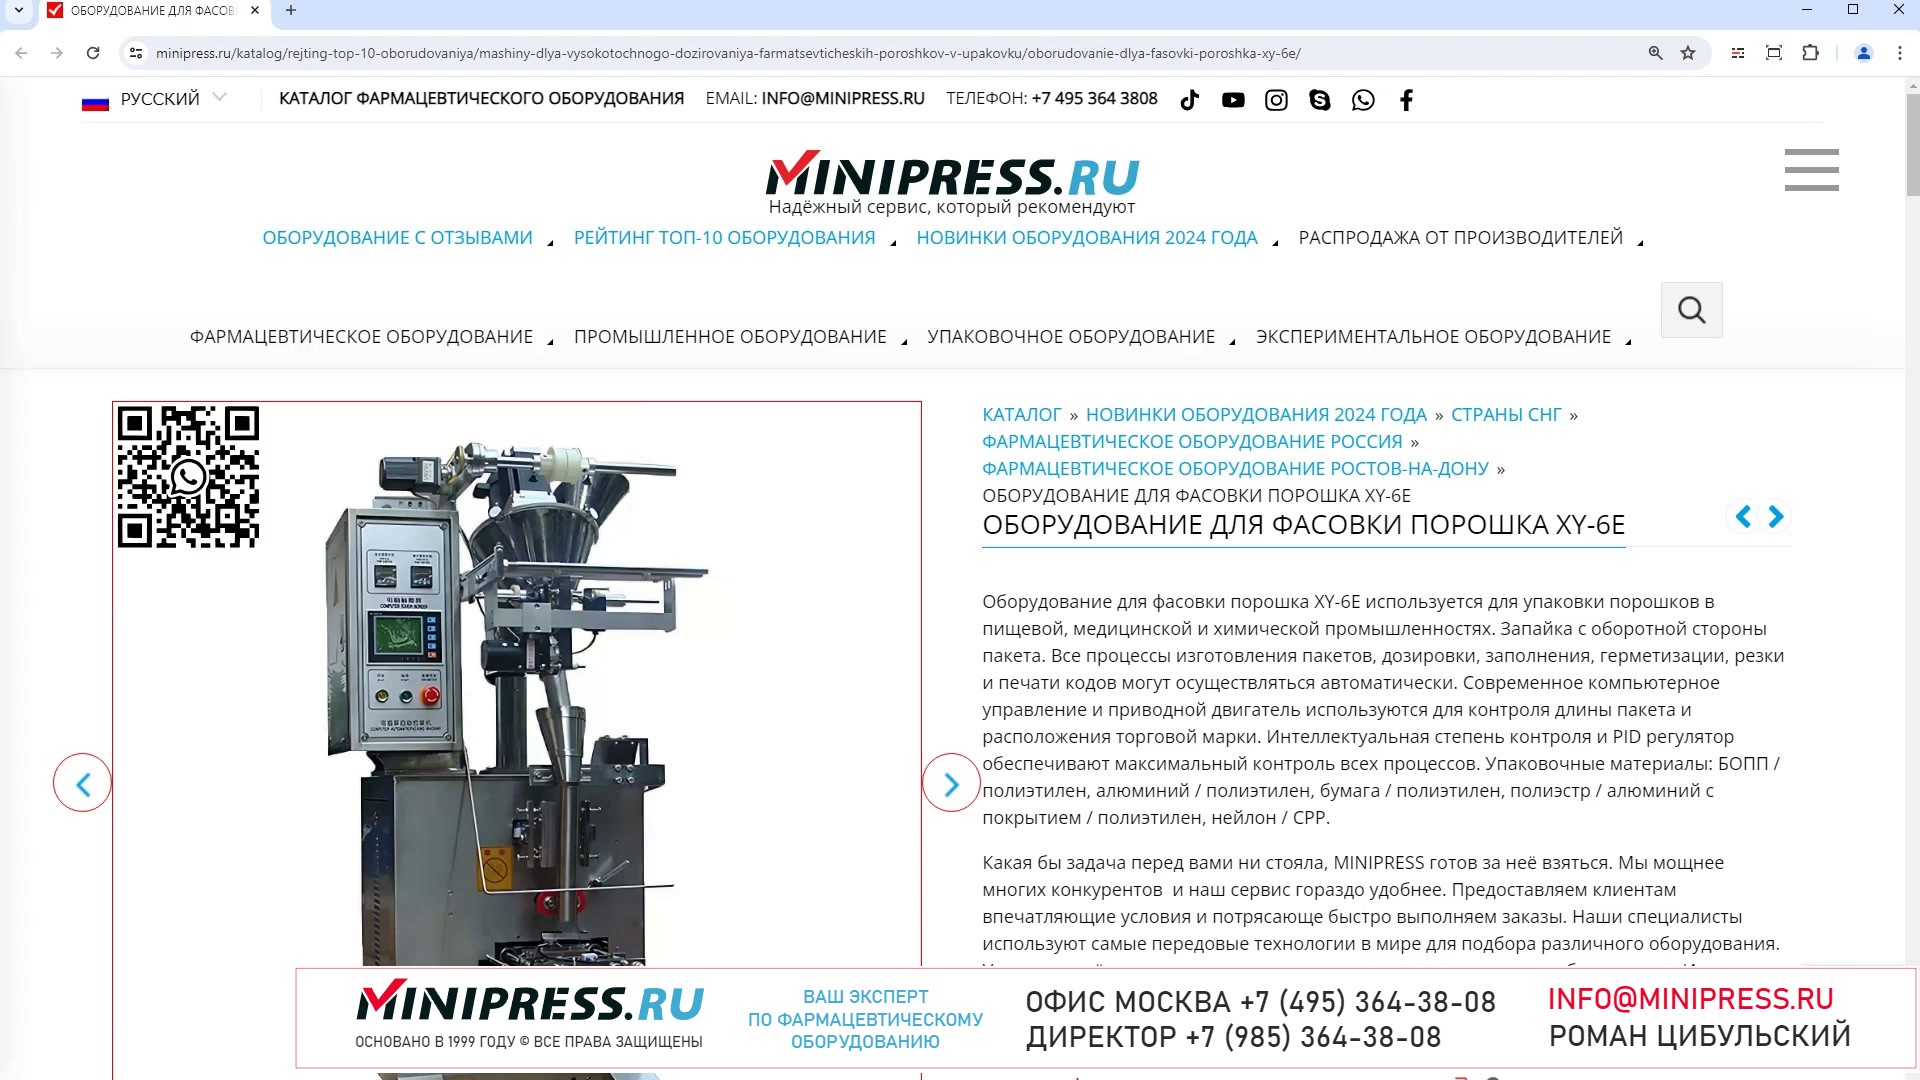 Minipress.ru Оборудование для фасовки порошка XY-6E